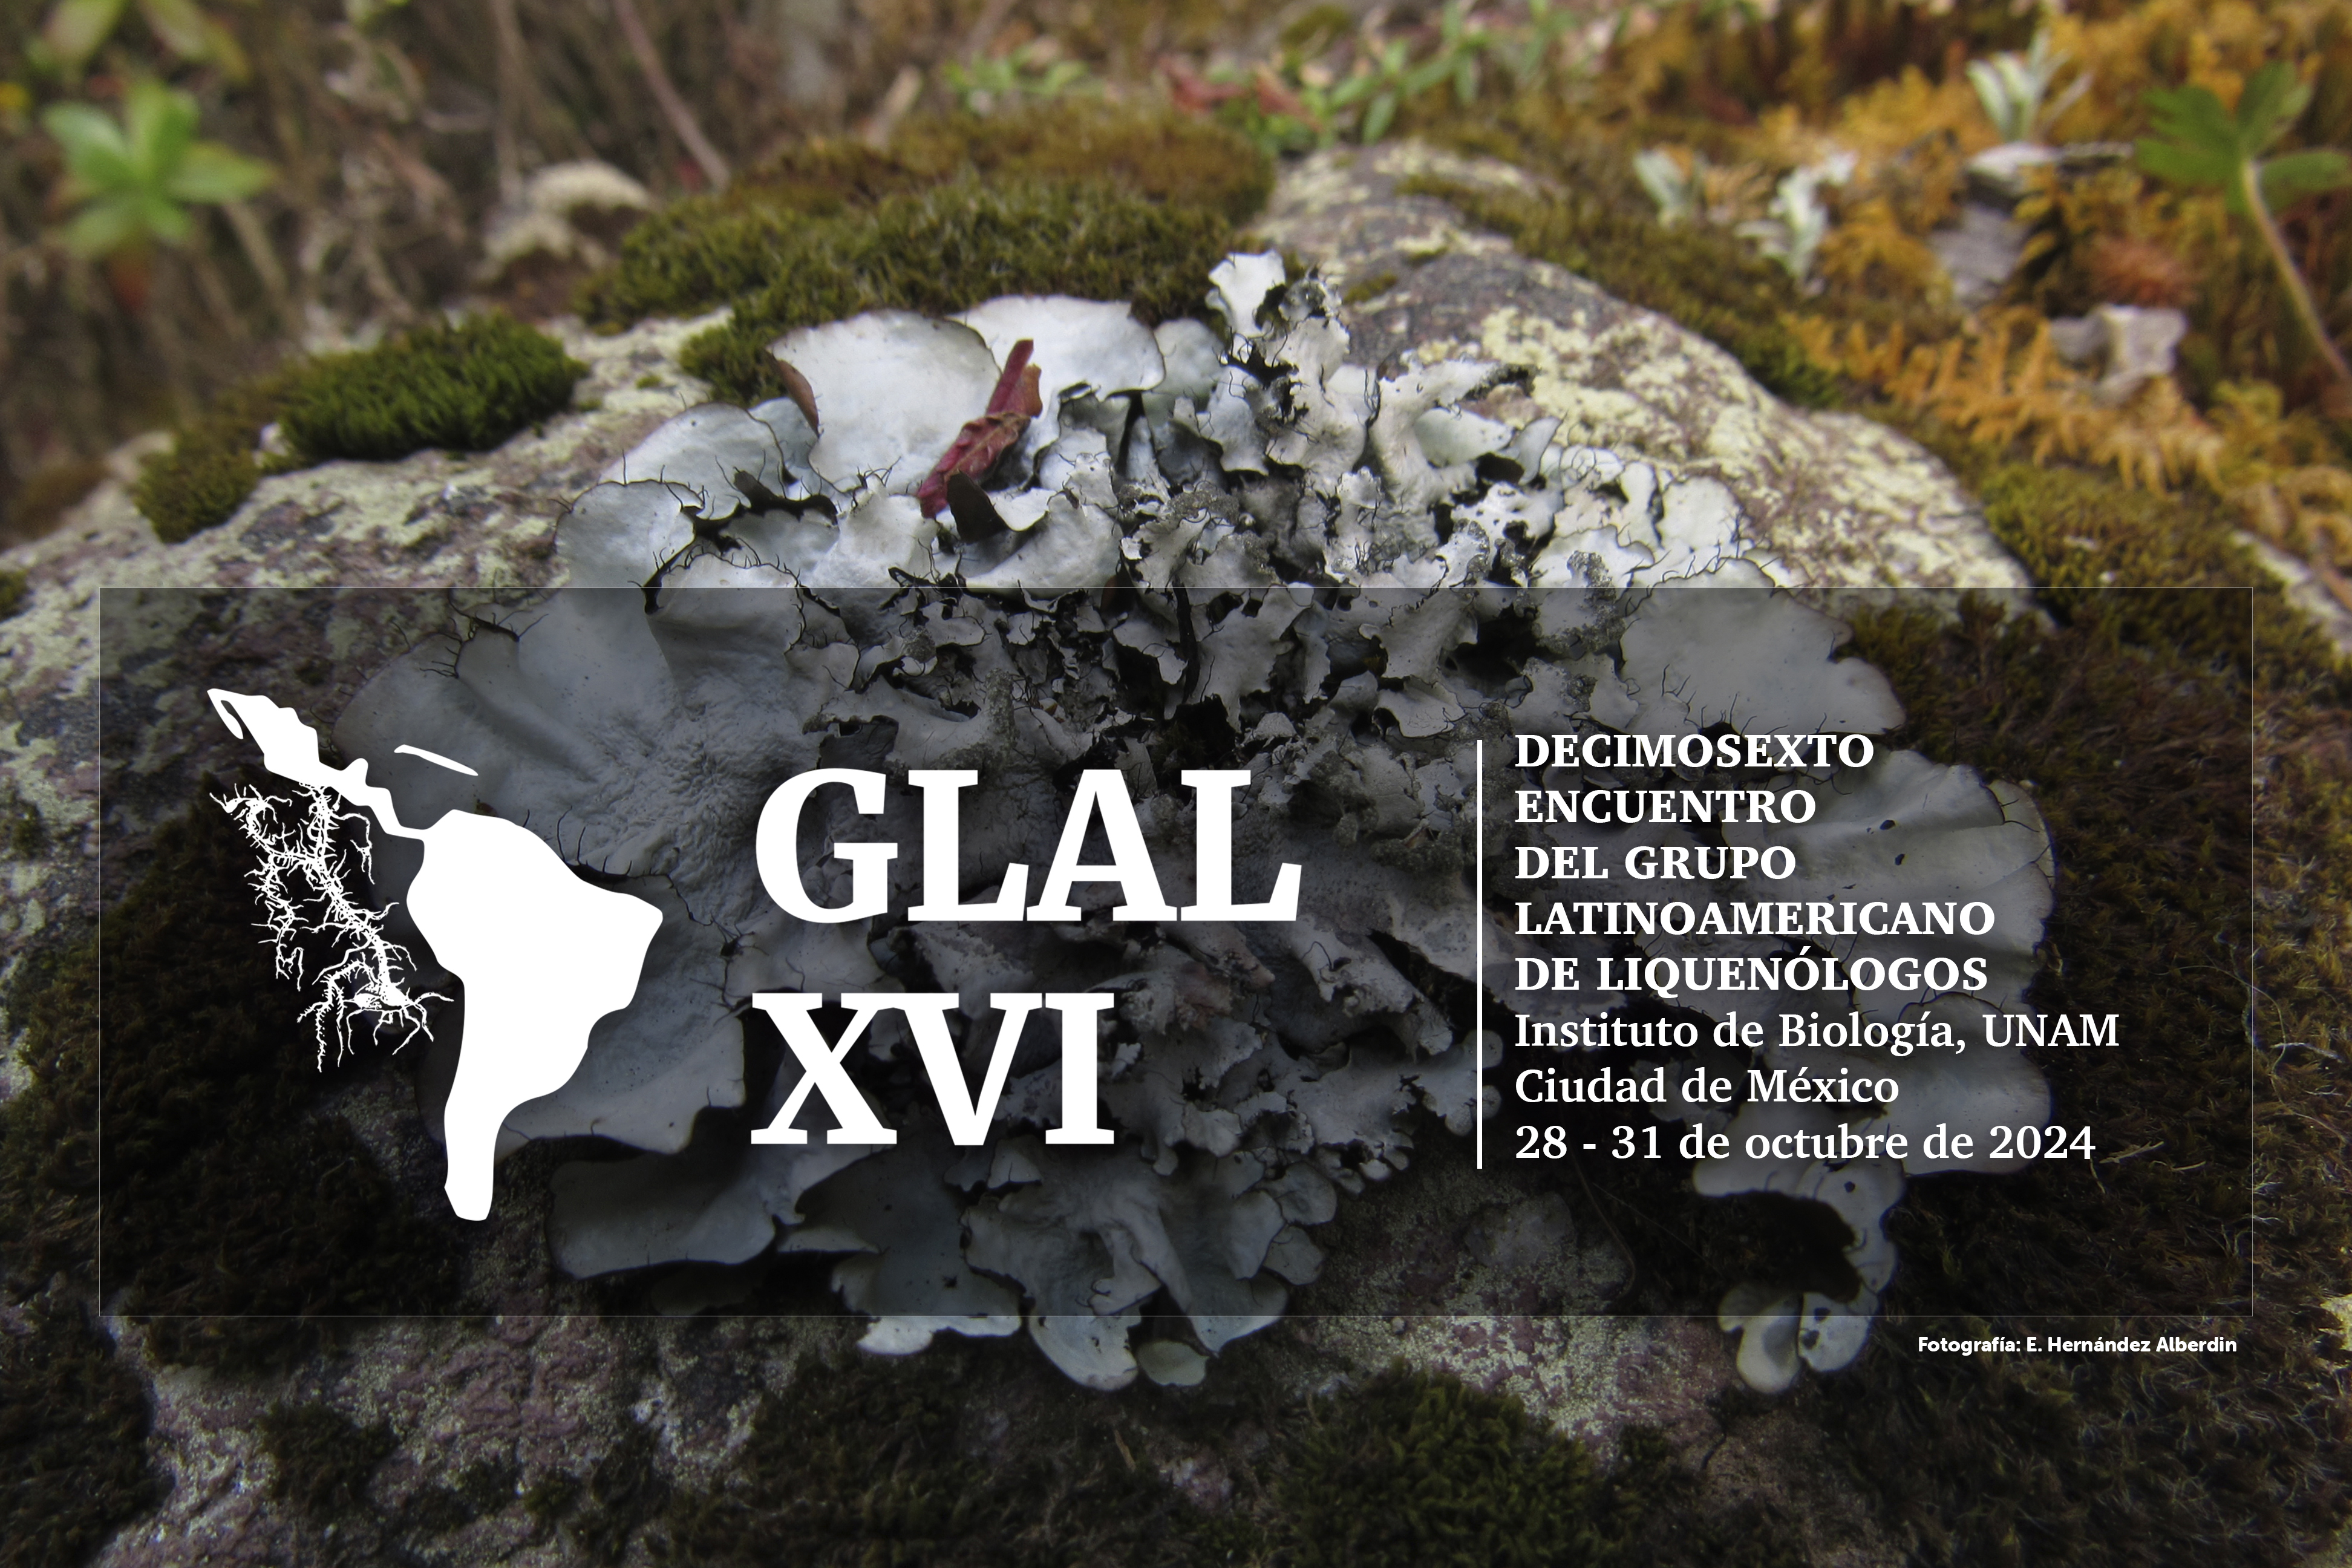 Decimosexto encuentro del Grupo Latinoamericano de Liquenólogos,GLAL XVI